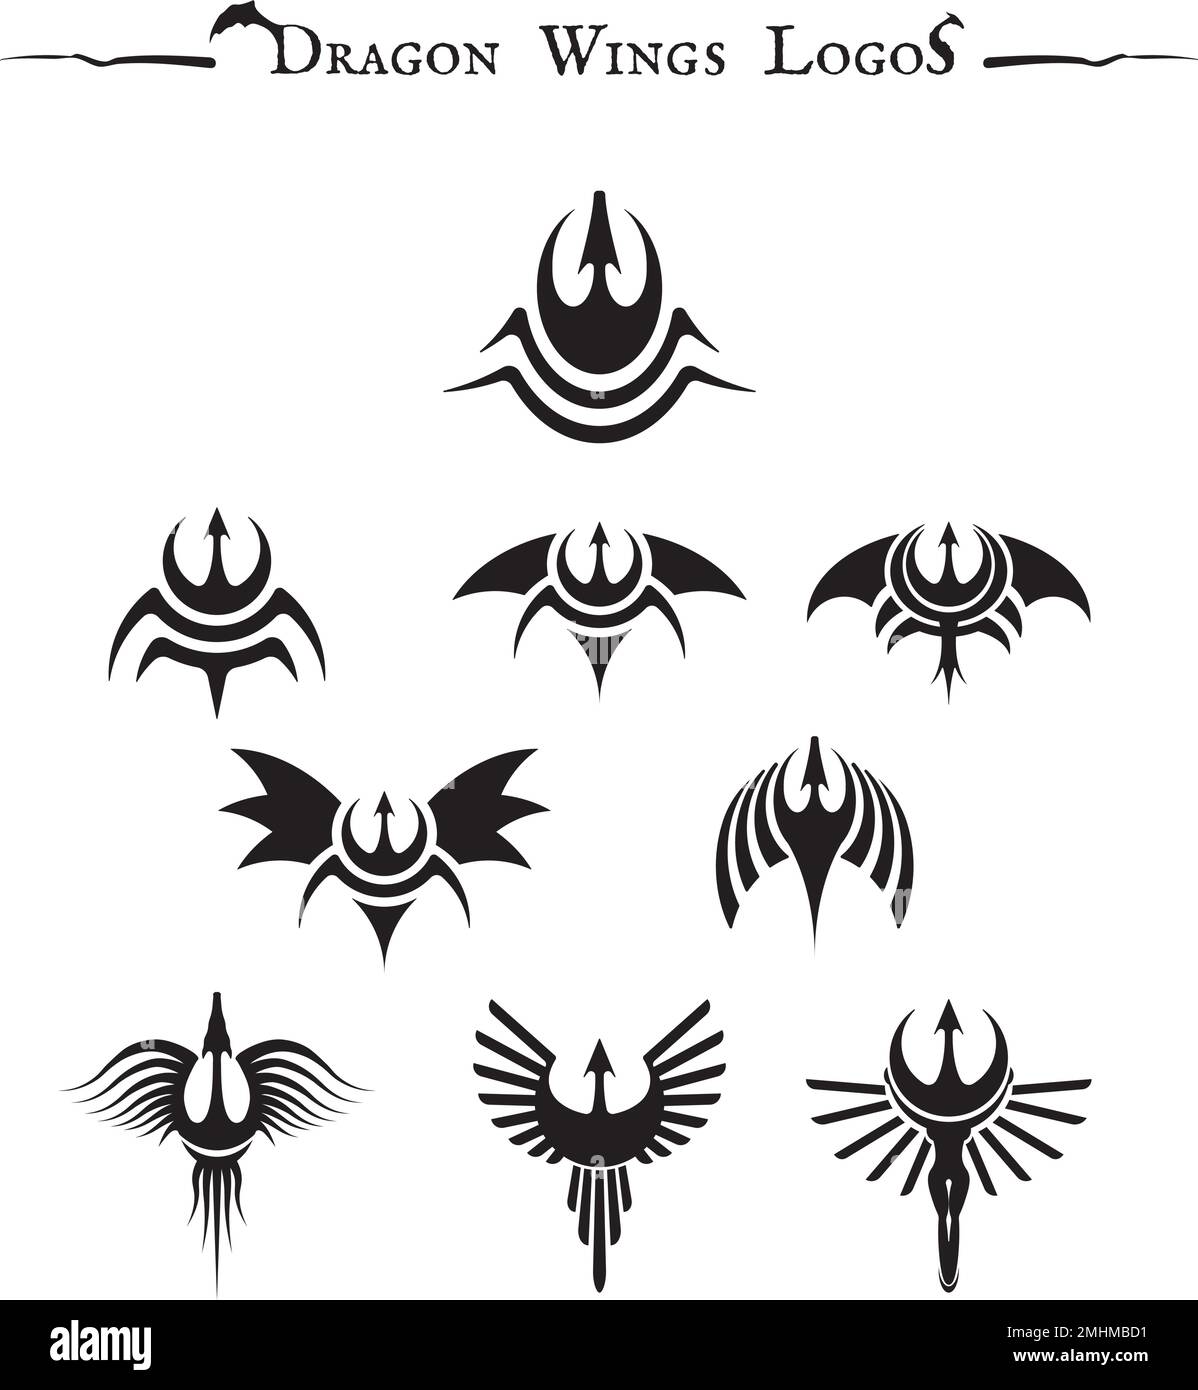 Dragon Wings Logos - Black Tribal Modern Tattoo Style Stock Vector